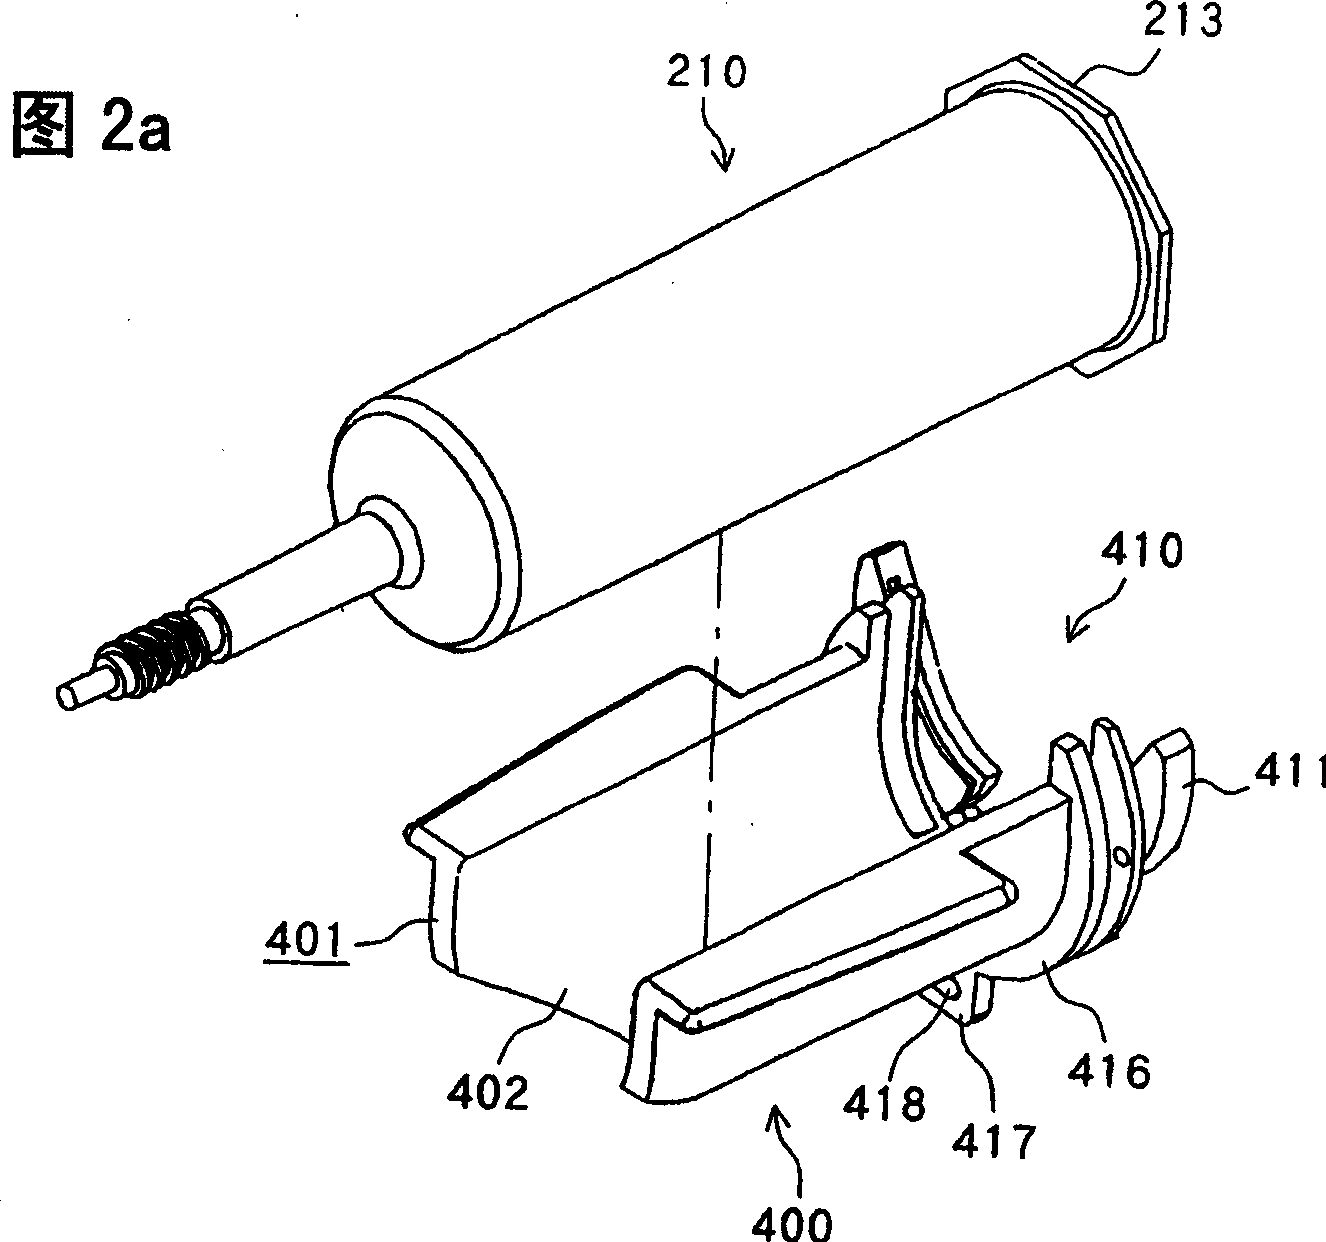 Liquid injection system with cylinder flange of liquid syringe